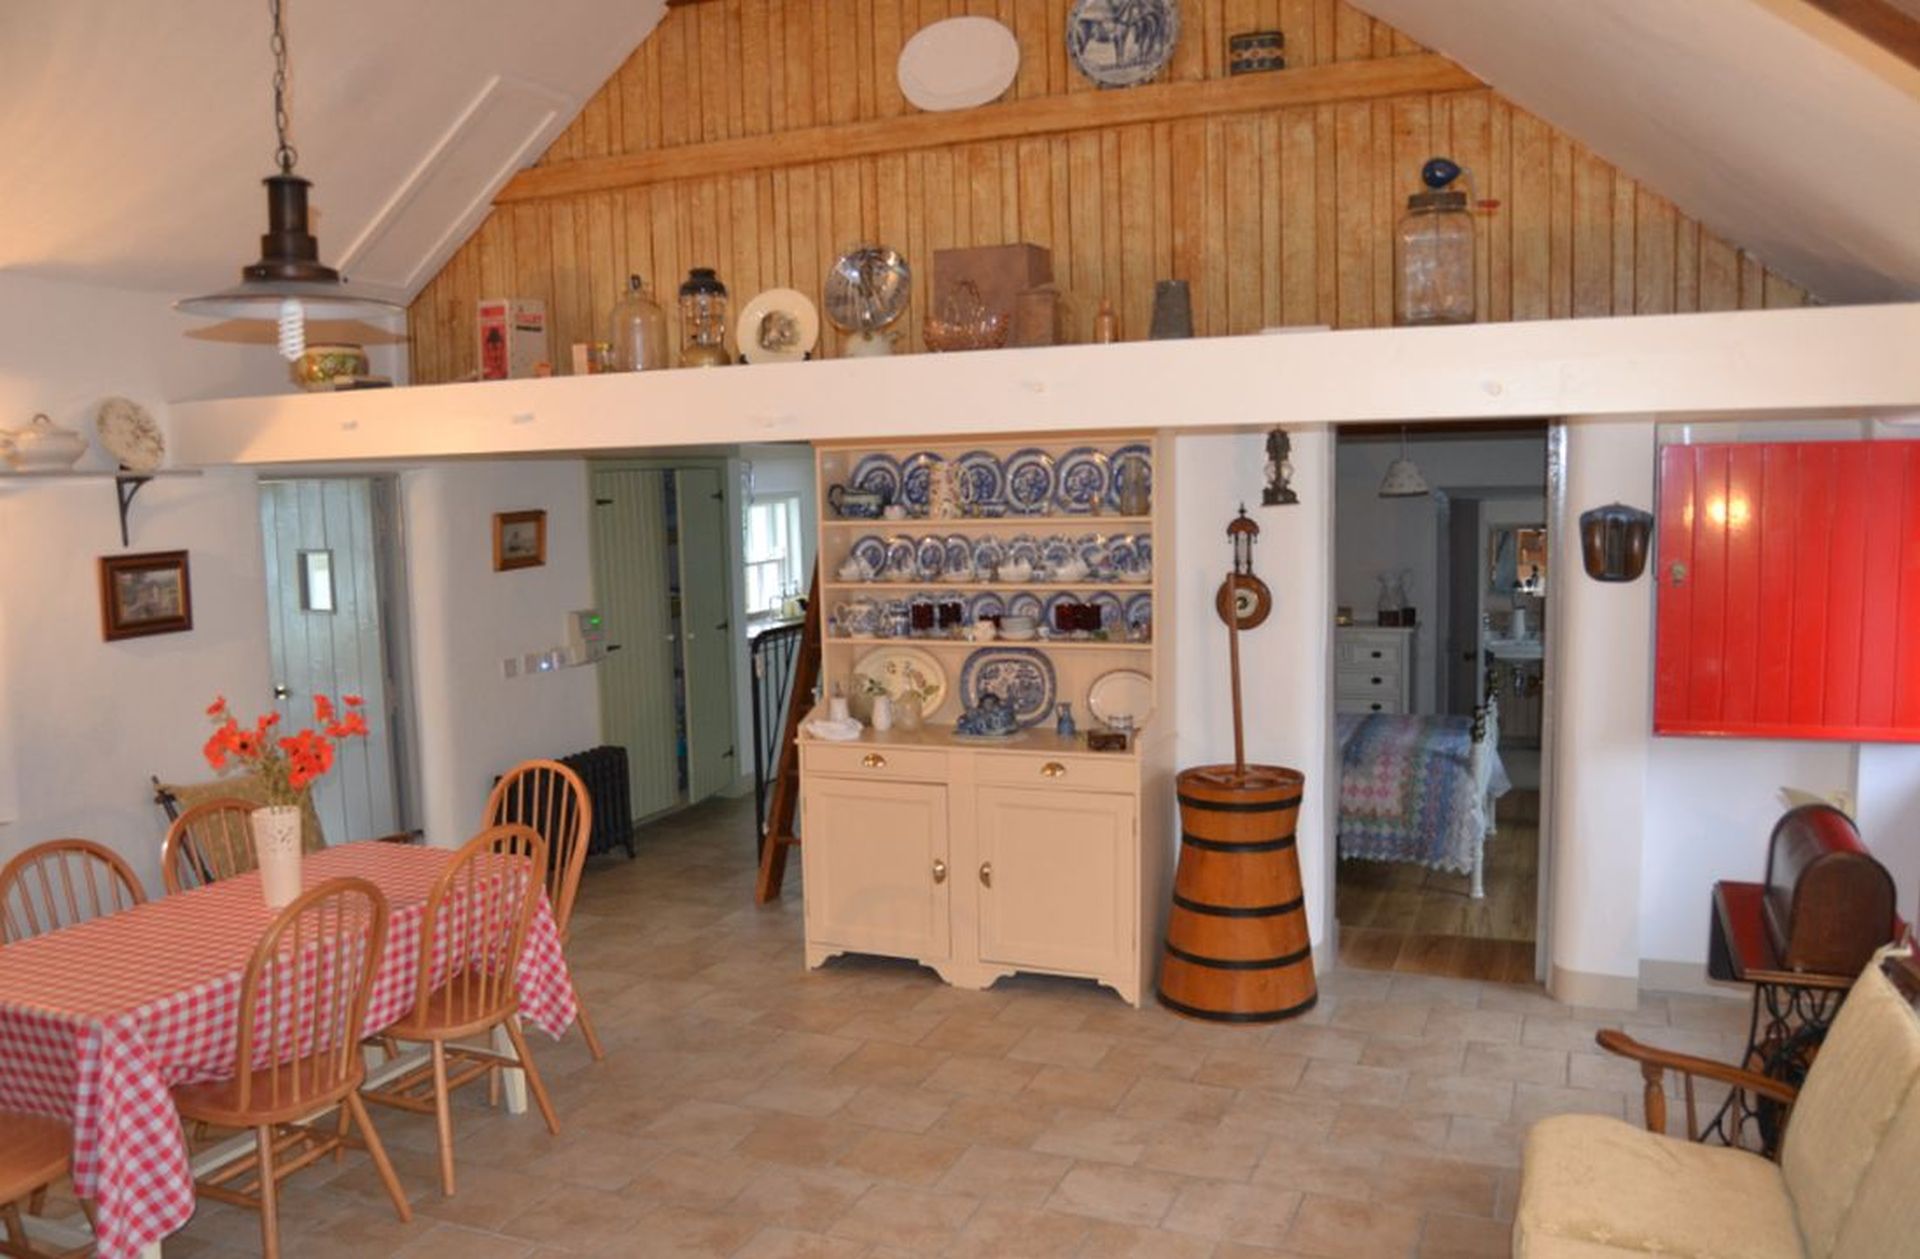 Cecils cottage interior